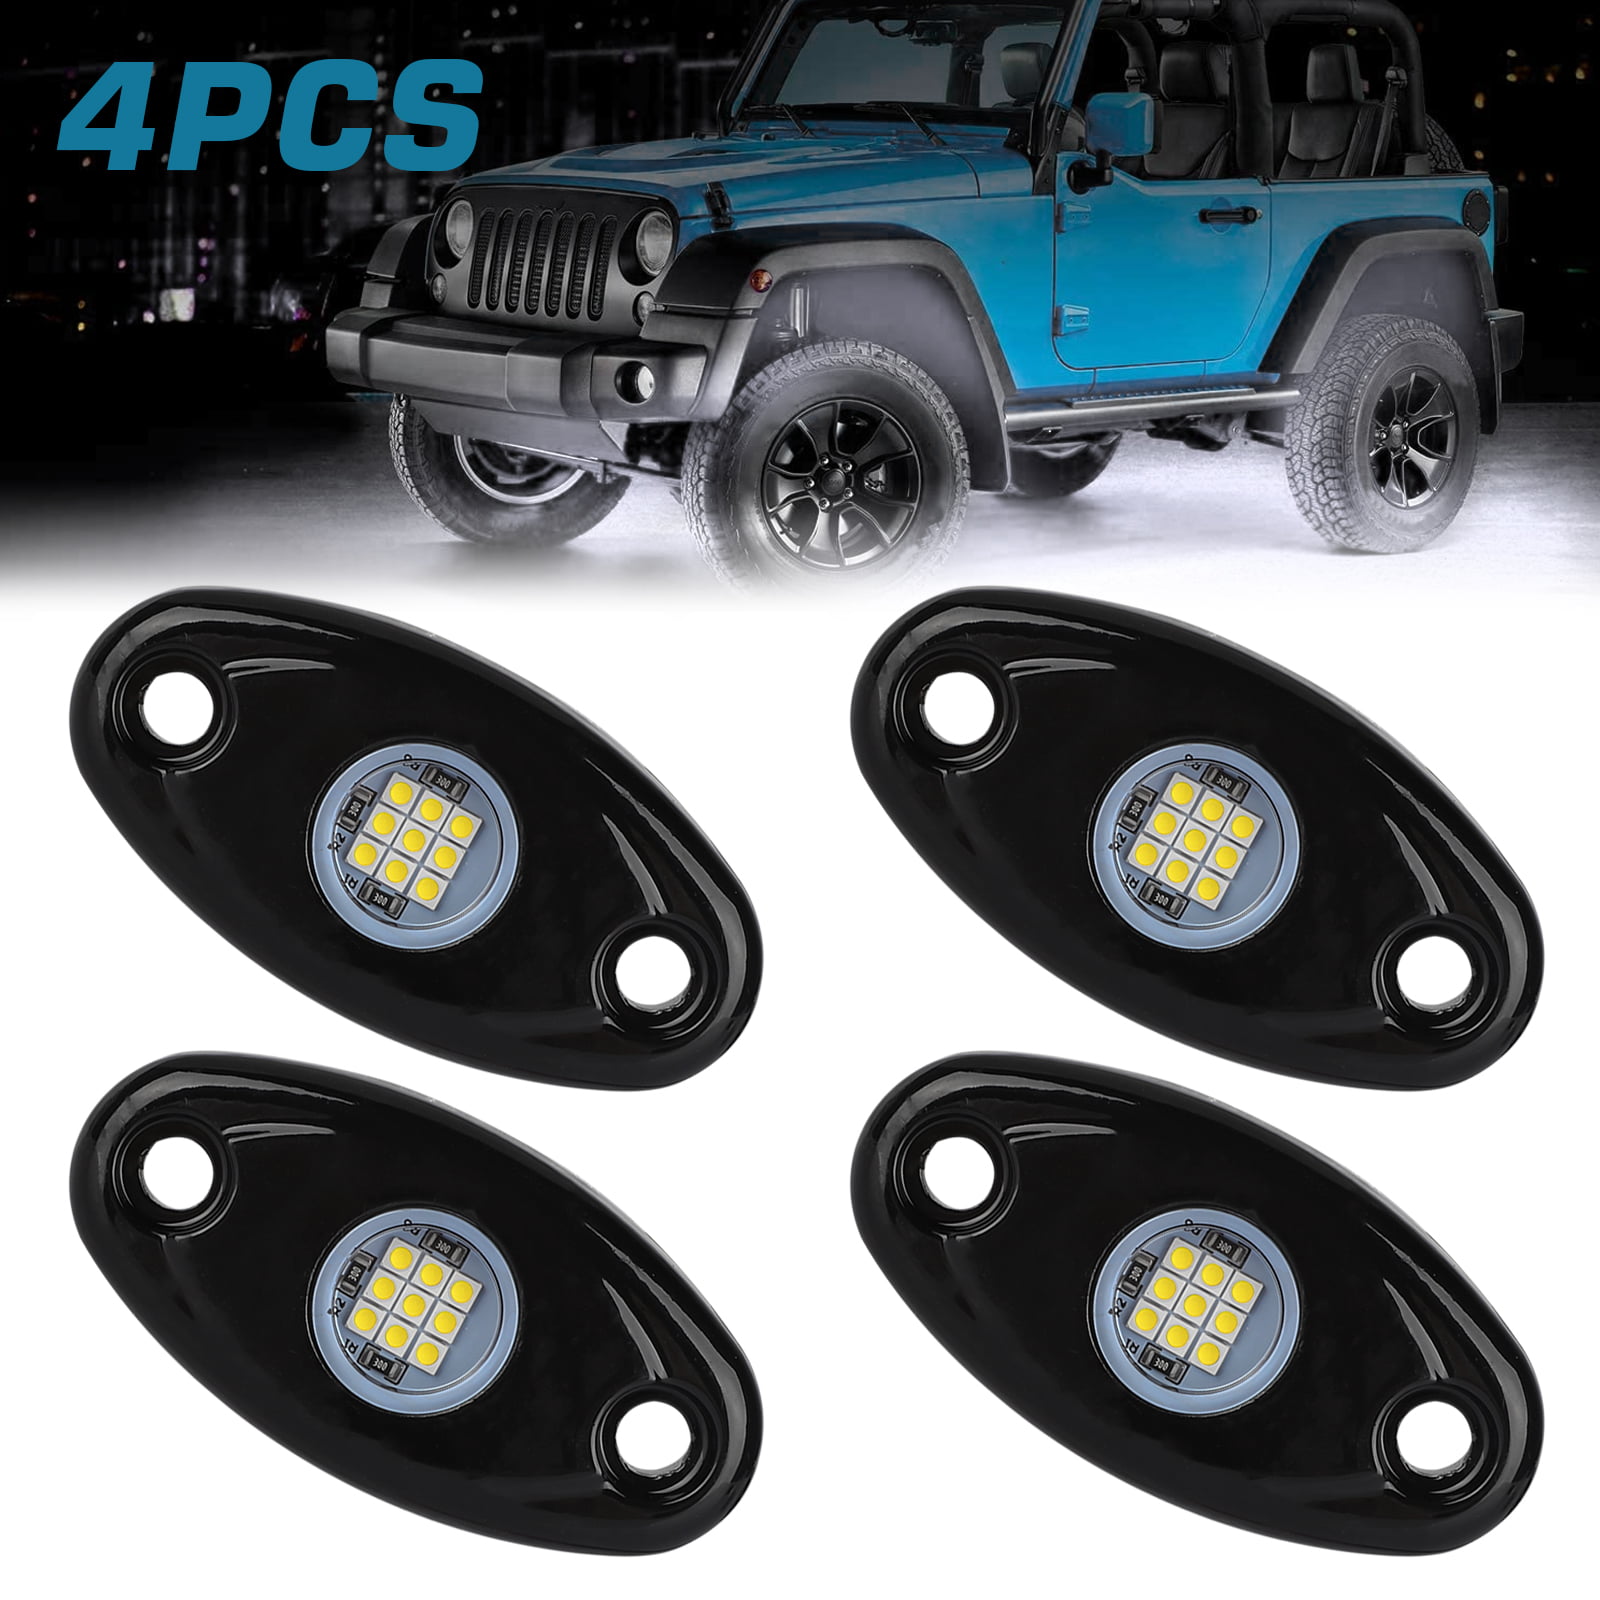 ONERAY LED Rock Lights 4 Pods Blue Neon Lights Waterproof for Car Truck ATV Jeep SUV Offroad Boat Underbody Fender Lighting 